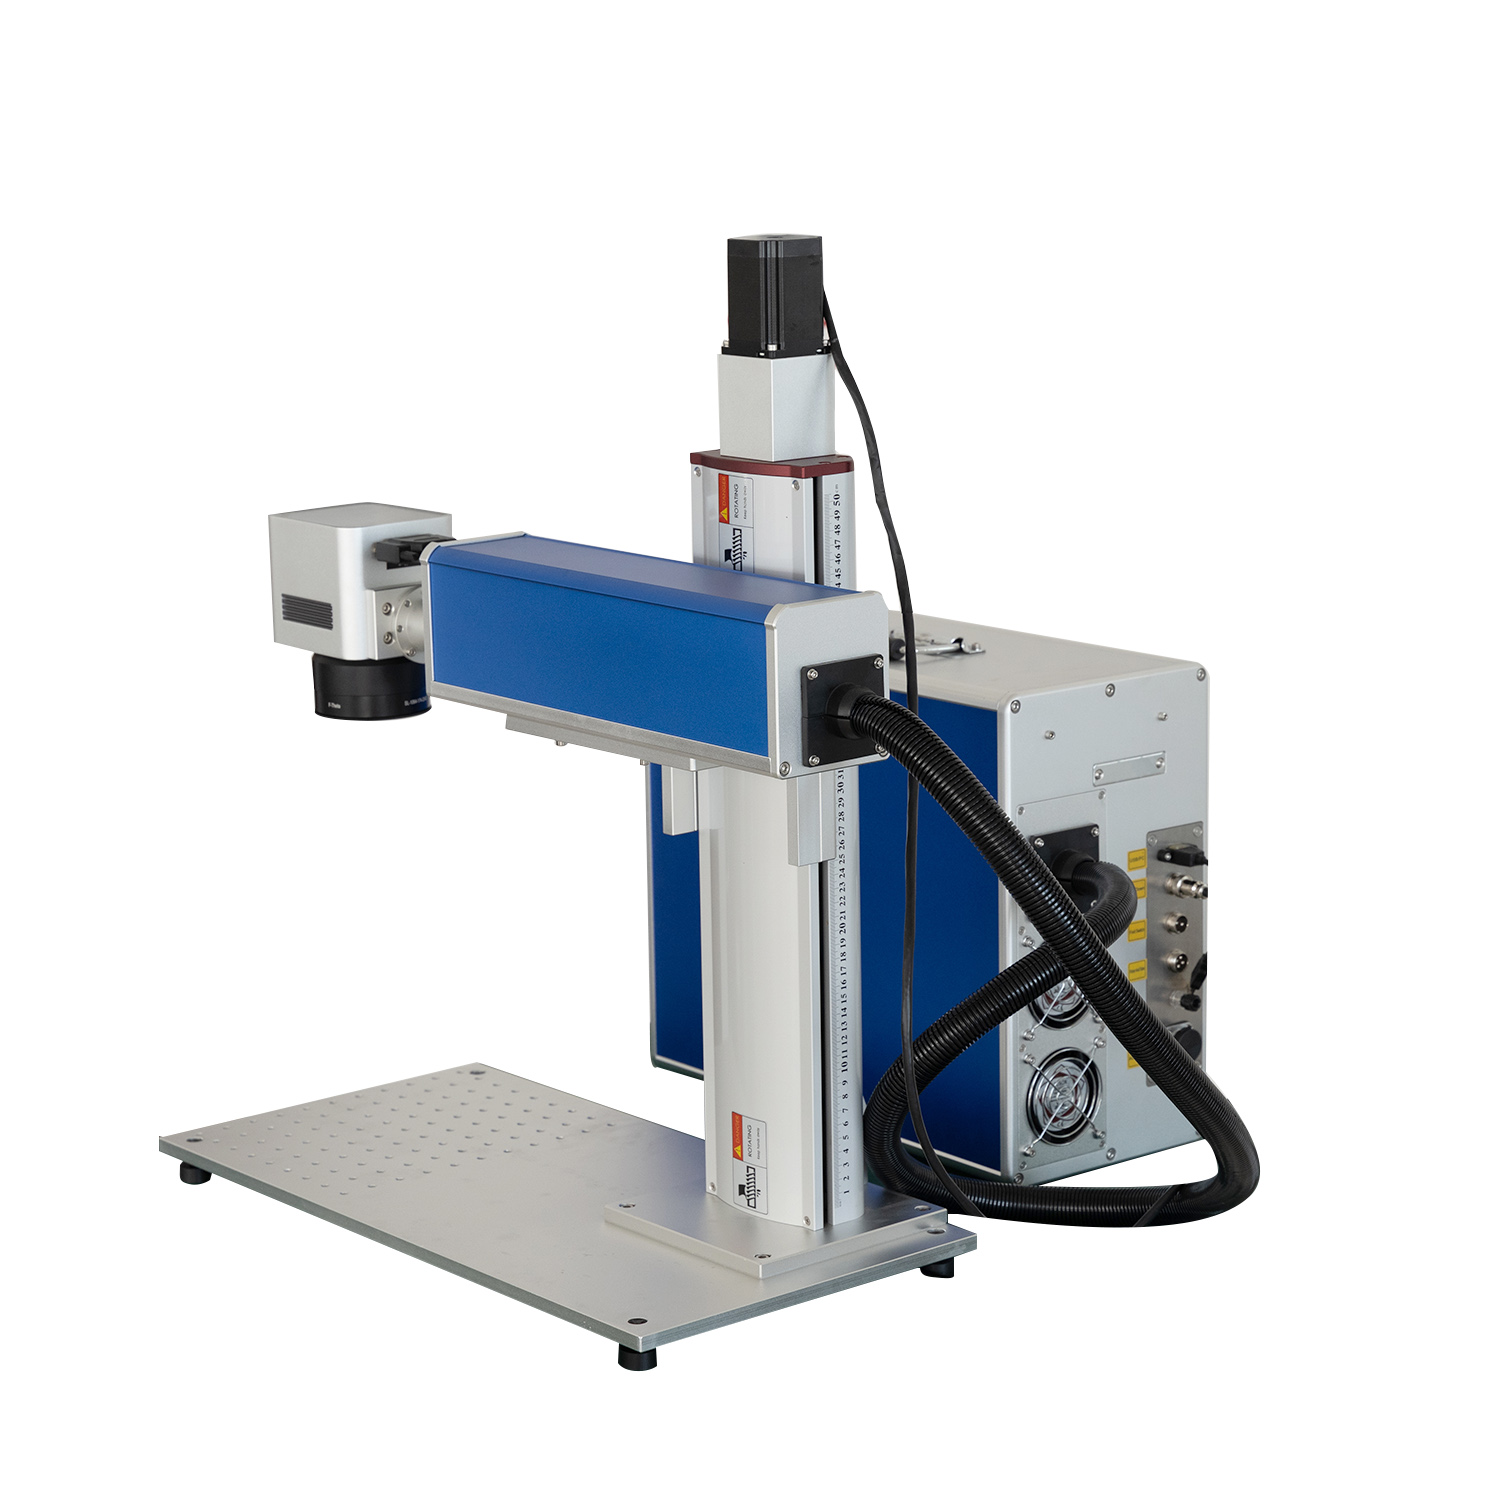 Ray fine JPT MOPA M8 20W 100W Fiber Laser Marking Machine for Glass Drilling Cutting Engraving metal marking